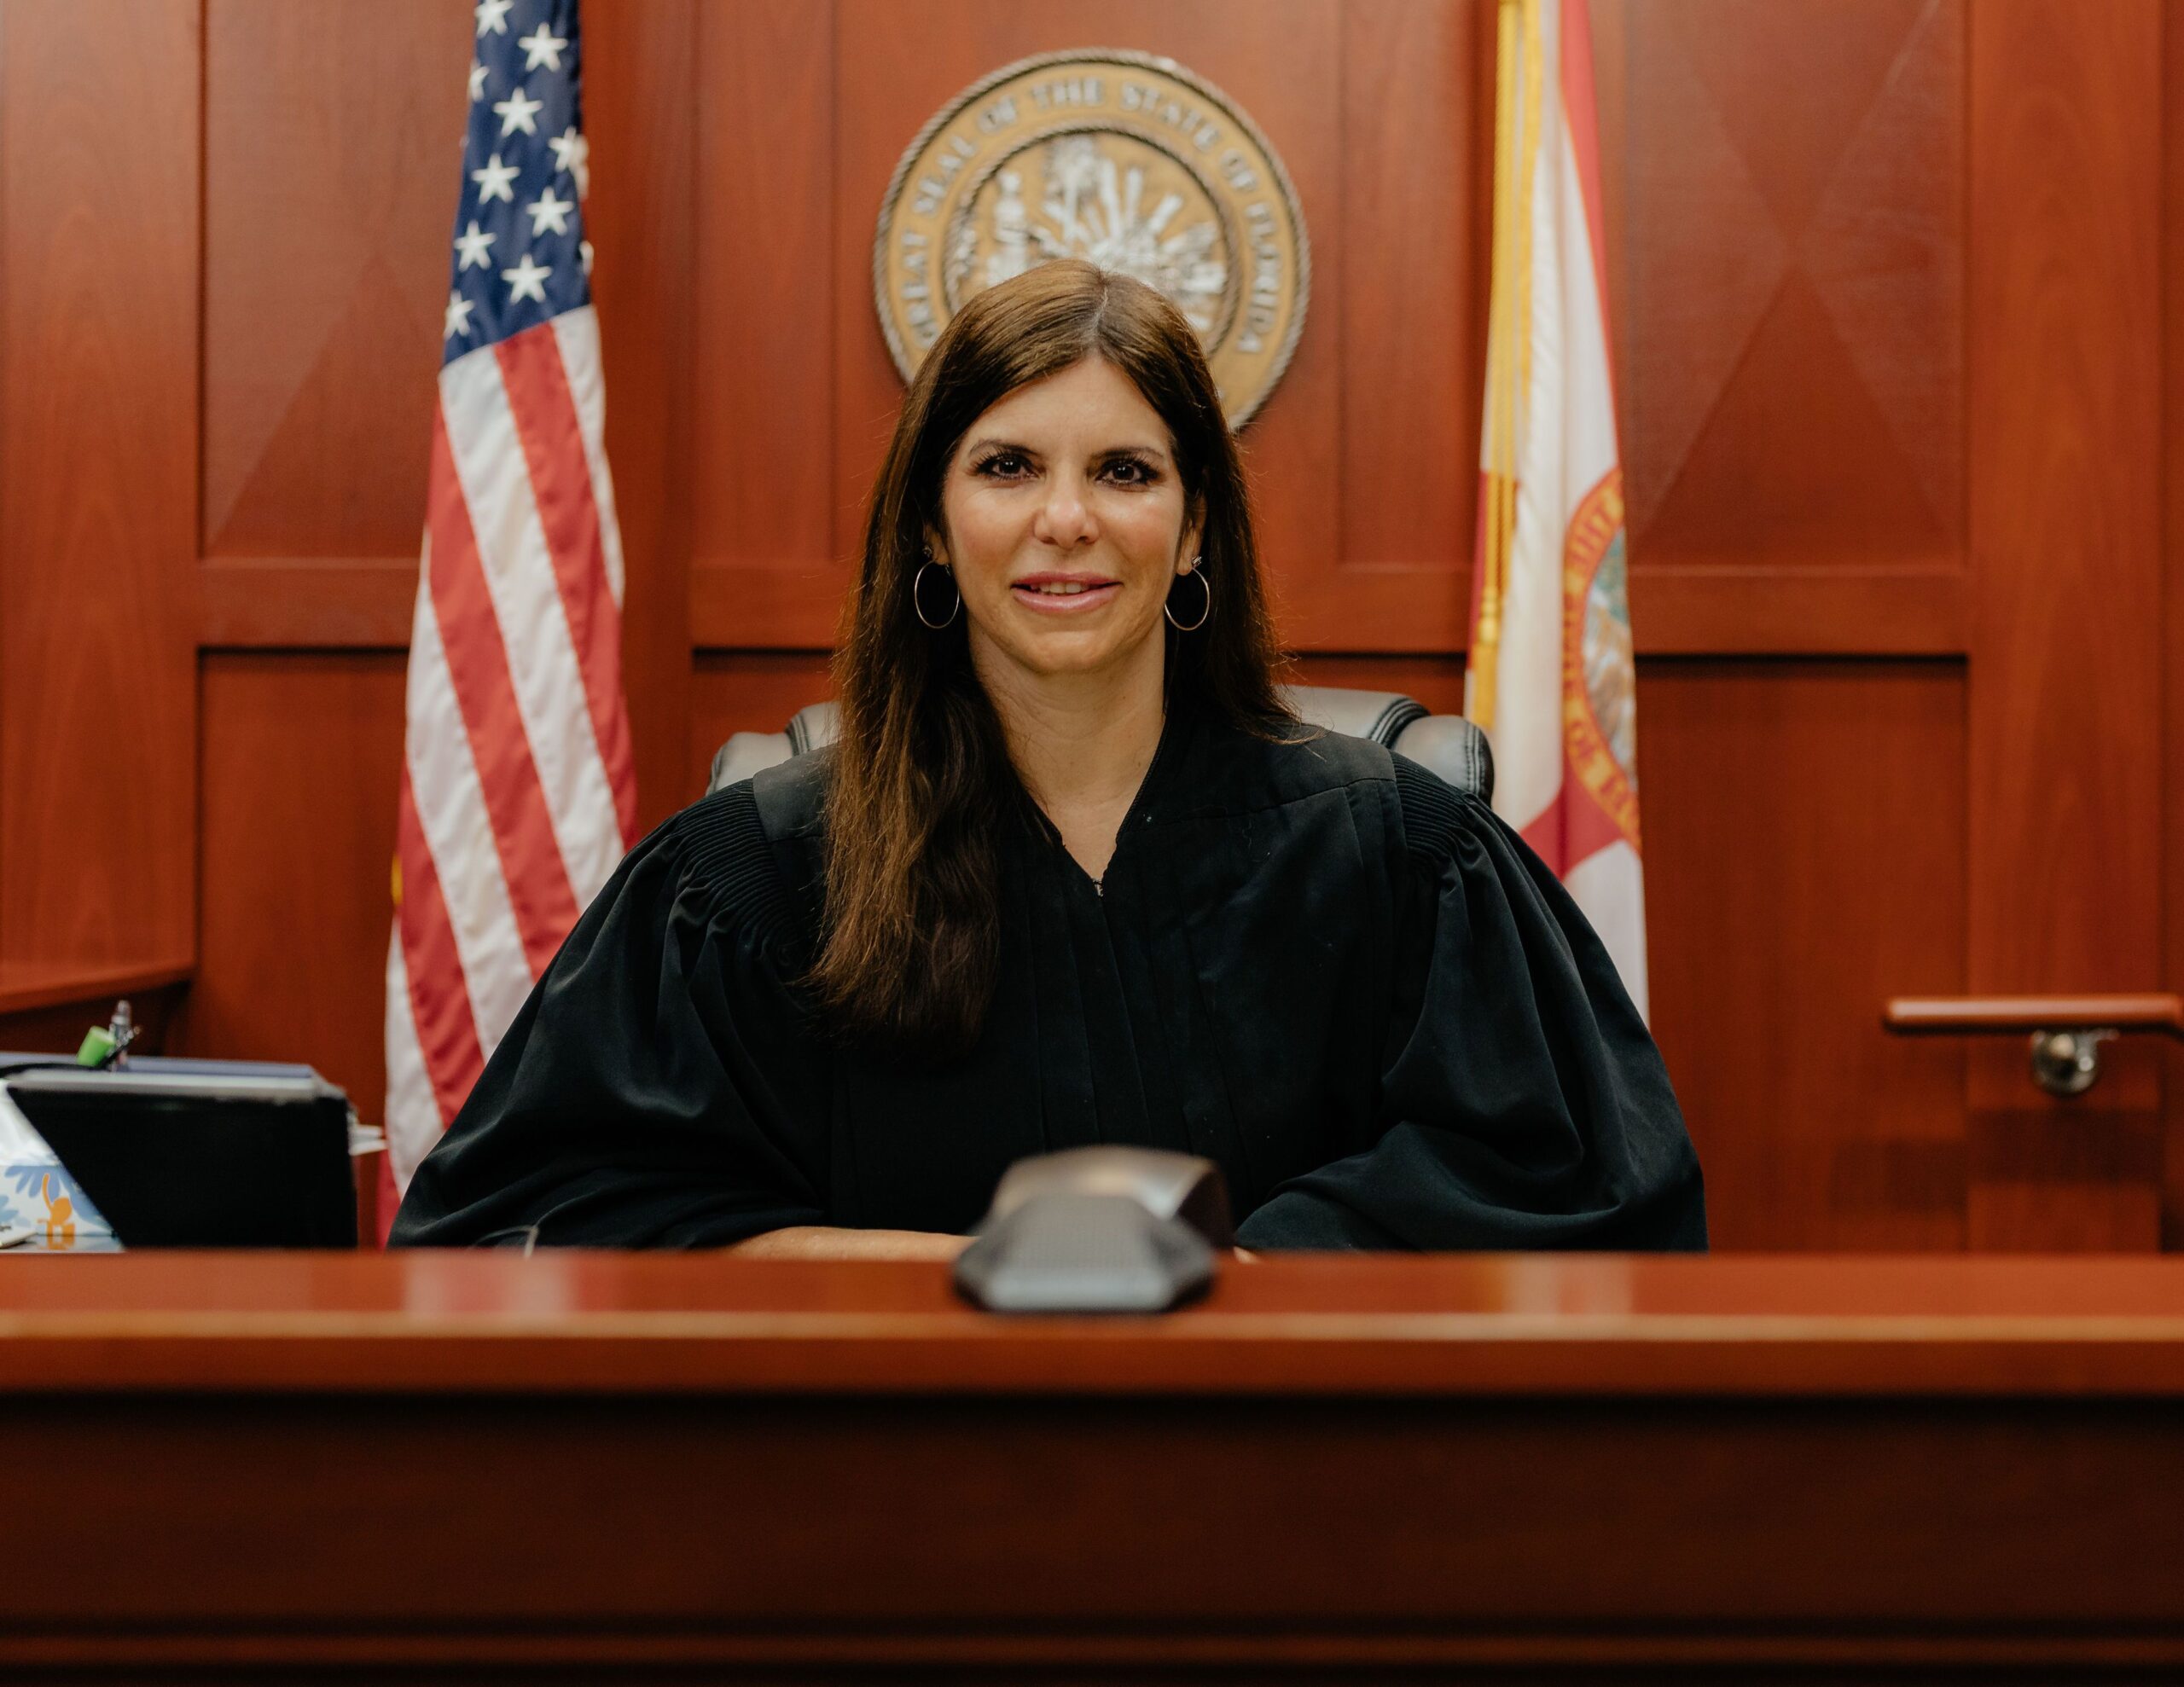 Judge_Jessica_ Recksiedler_Official_Headshot